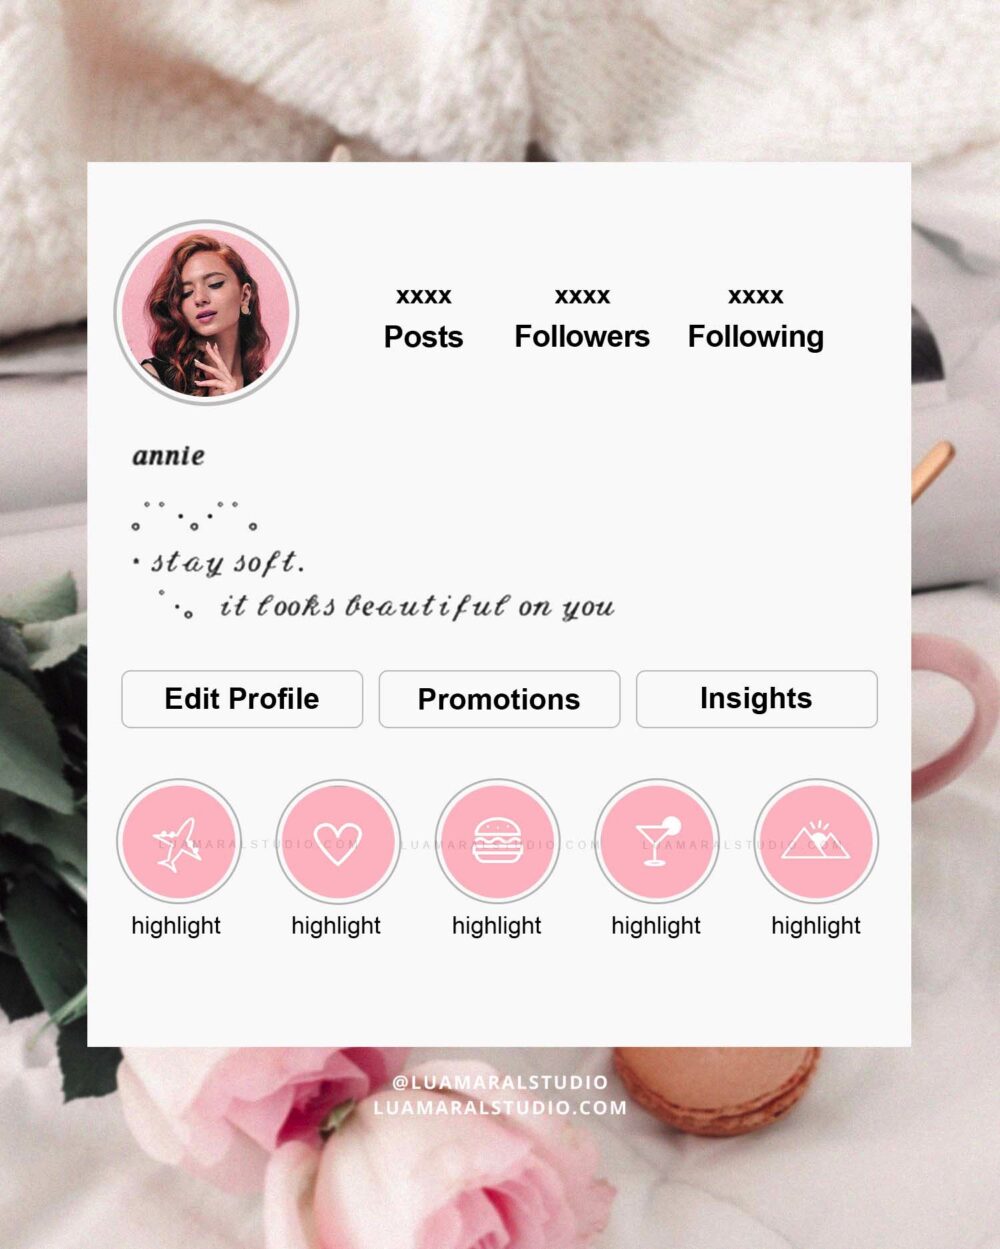 Aesthetic Instagram bio ideas copy/paste - part 3 - Girly bios ⋆ The ...